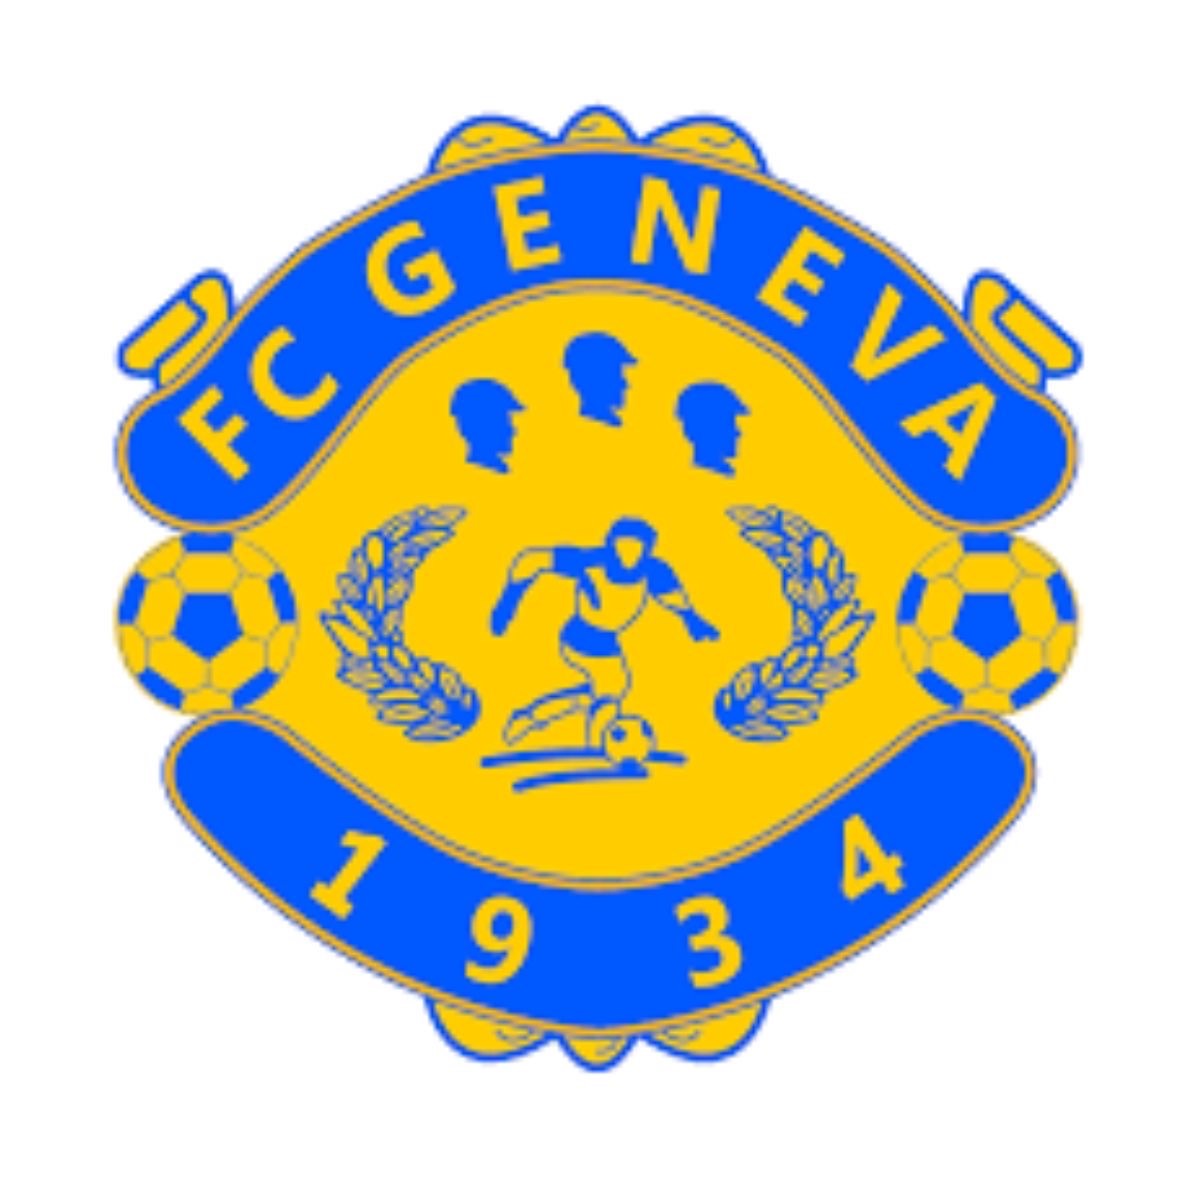 FC GENEVA logo.jpg